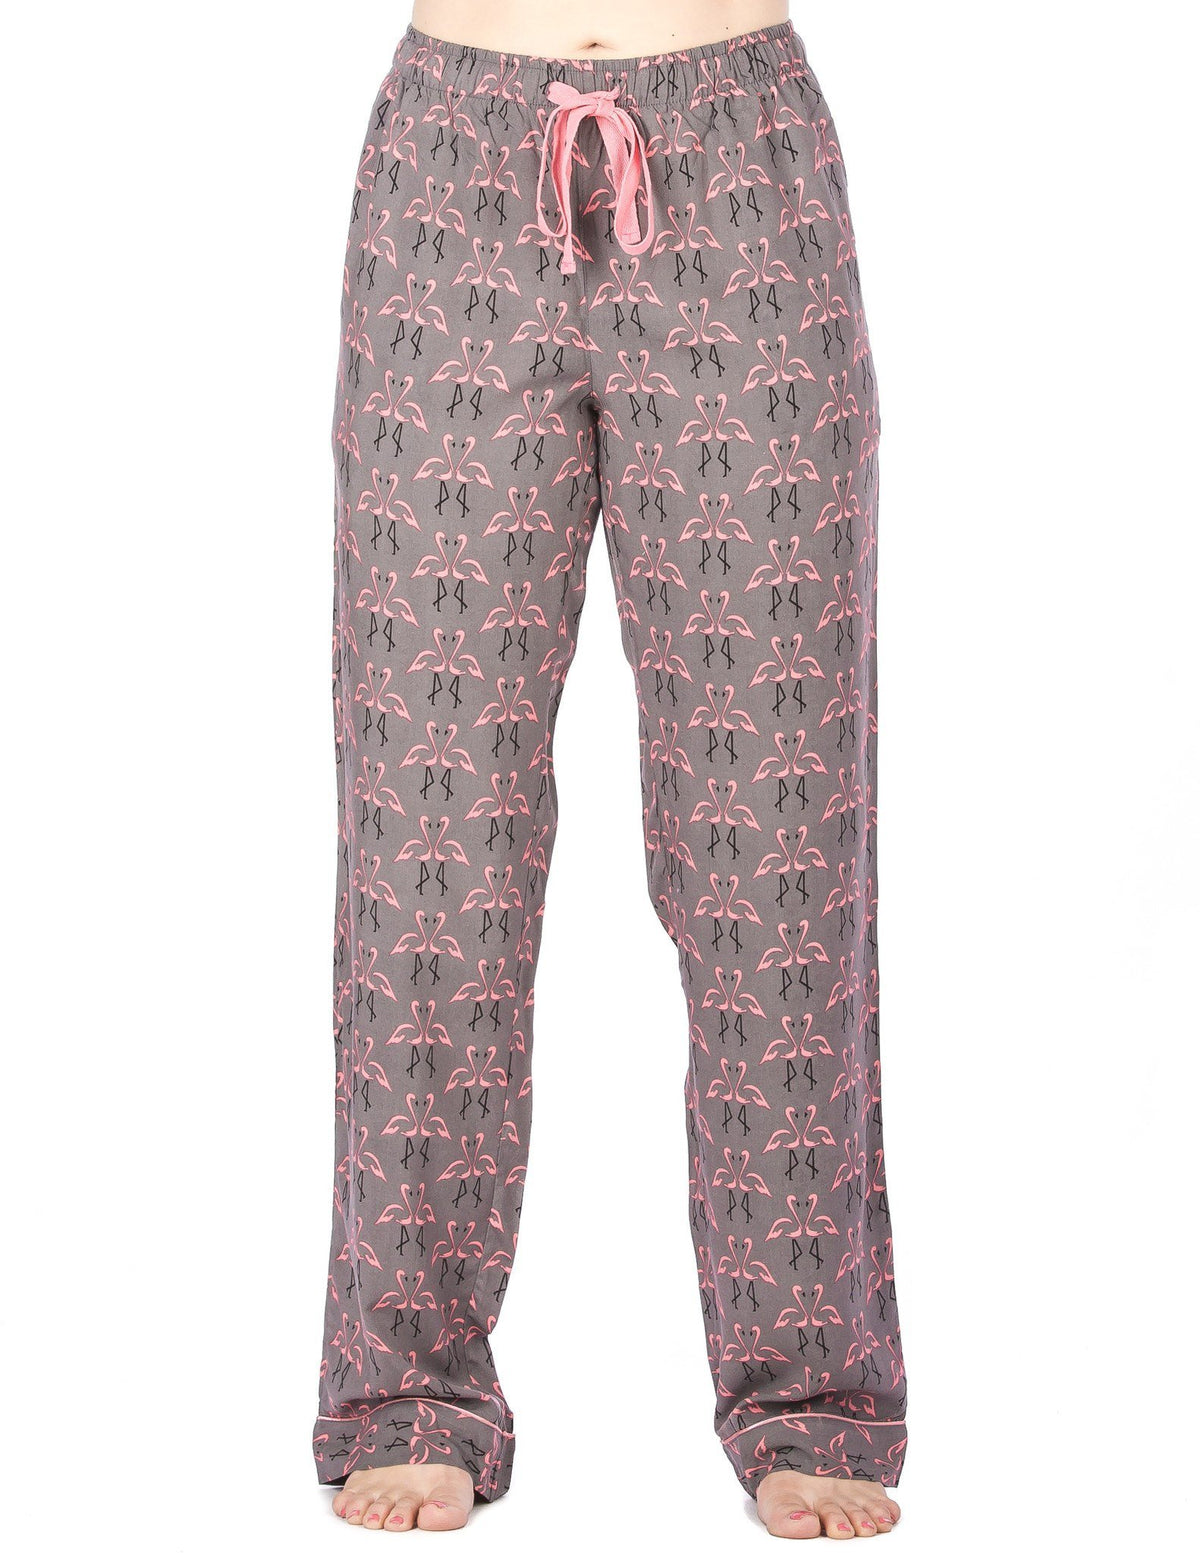 Women's Cool Breeze Woven Lounge Pants - Flamingos - Grey/Pink